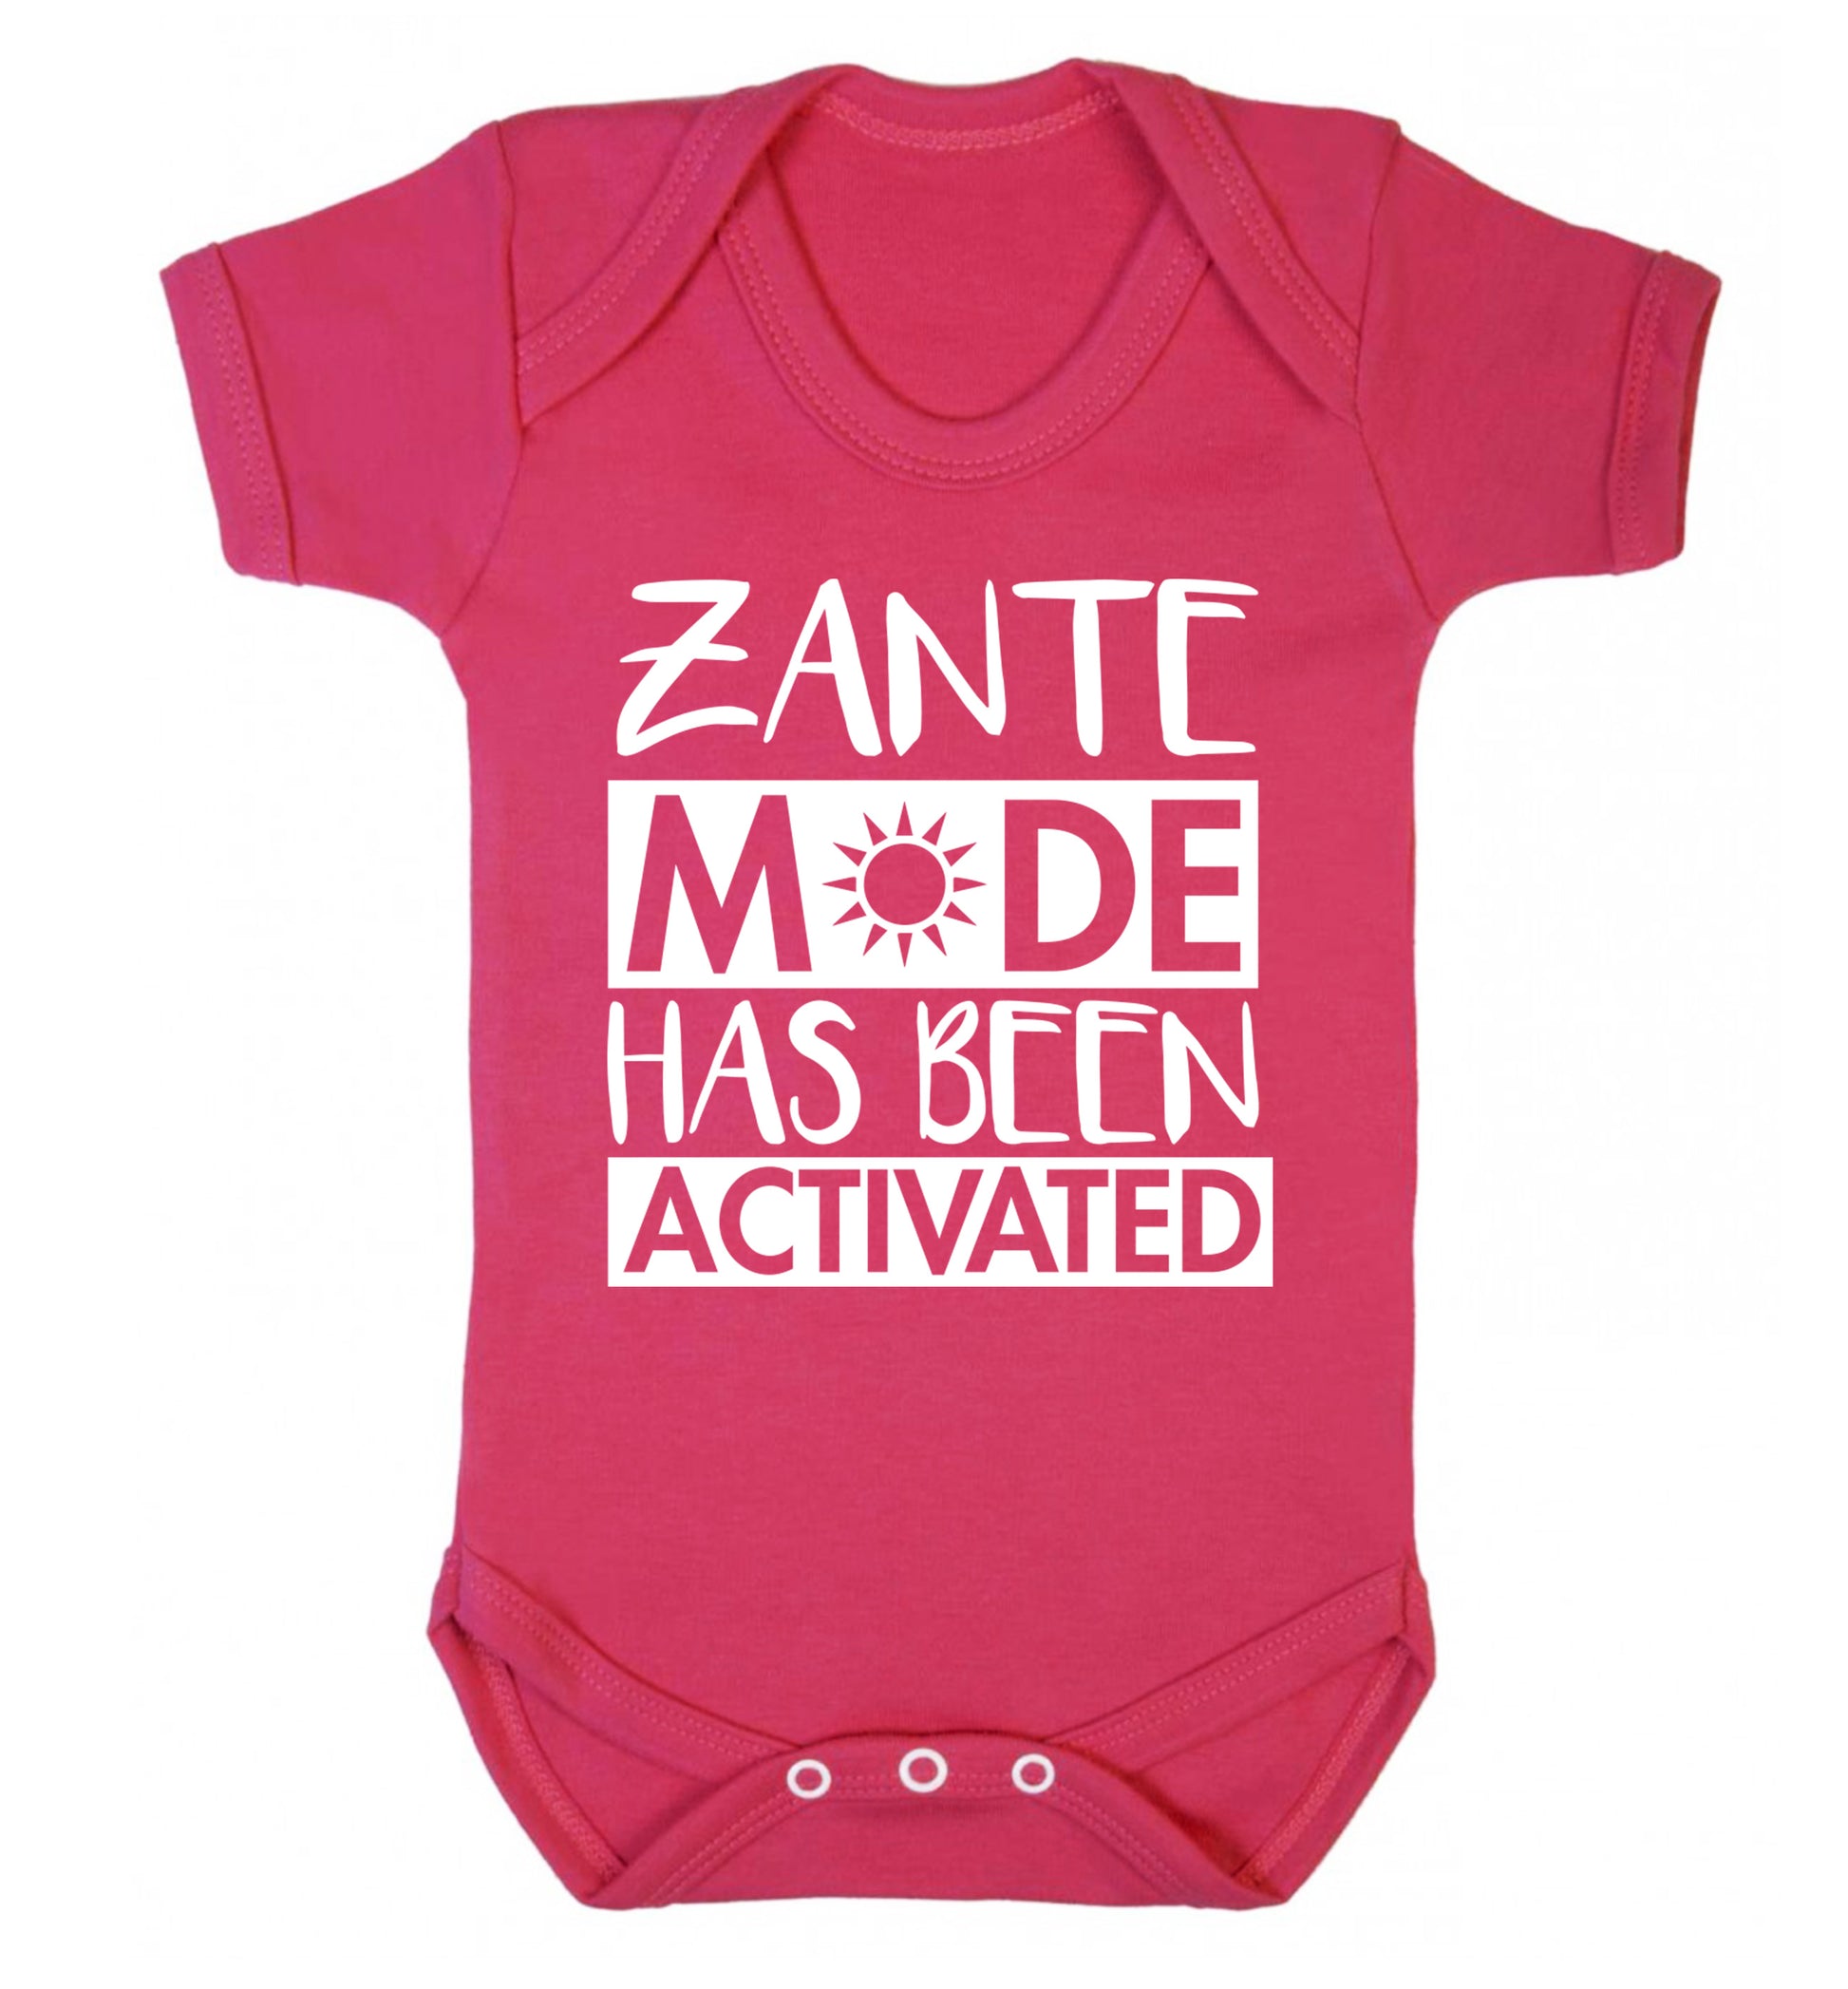 Zante mode has been activated Baby Vest dark pink 18-24 months